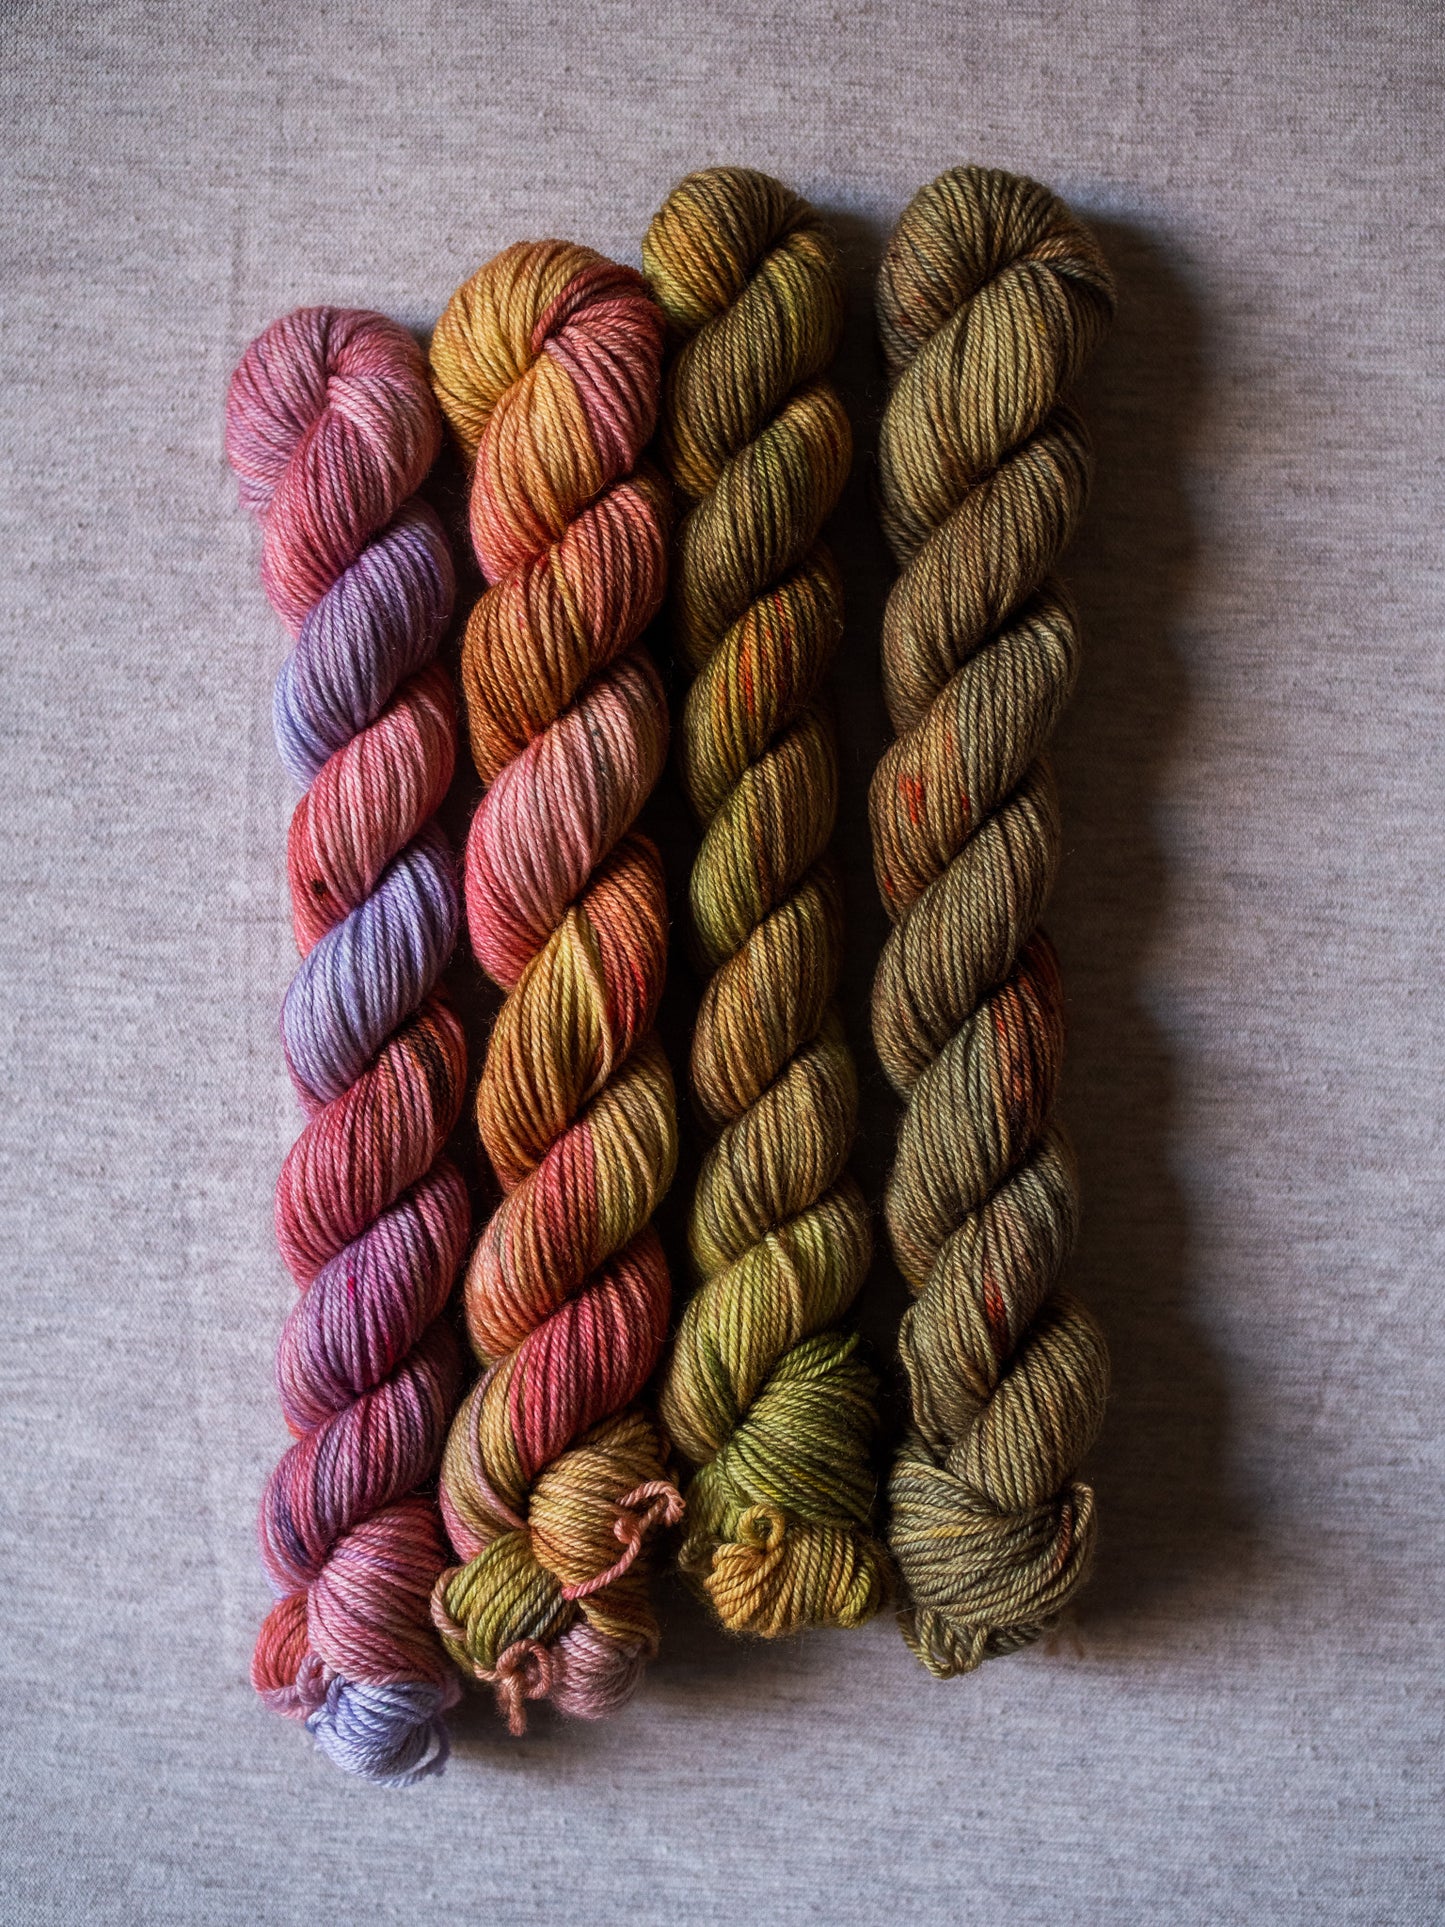 NEW IN! Westknits Geogradient MKAL yarn kit - 4 shade gradient set - Multicolor